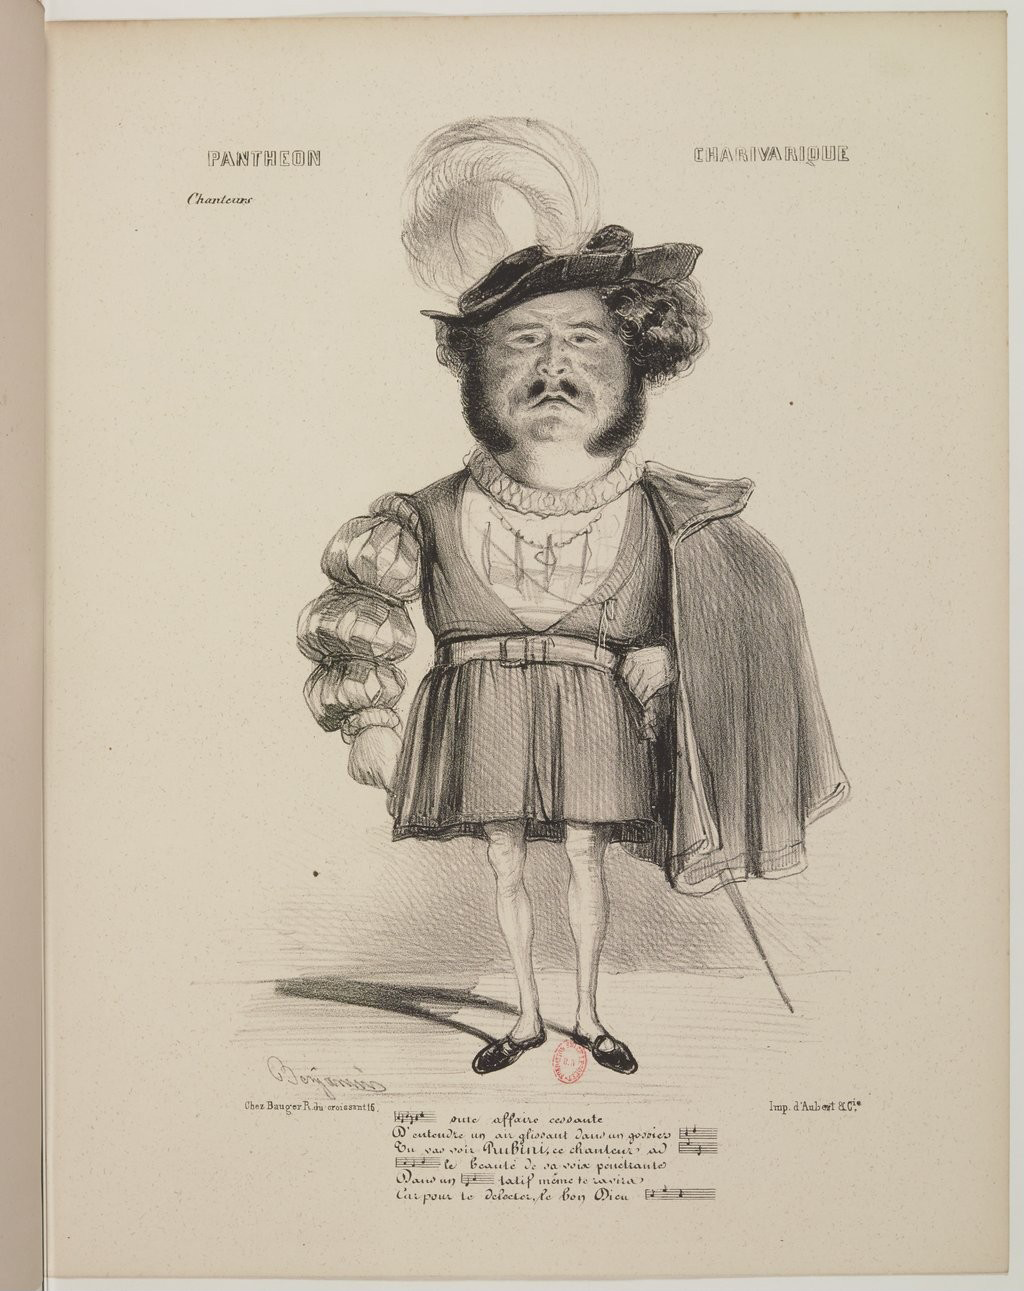 Giovanni Battista Rubini par Benjamin Roubaud - Panthéon charivarique